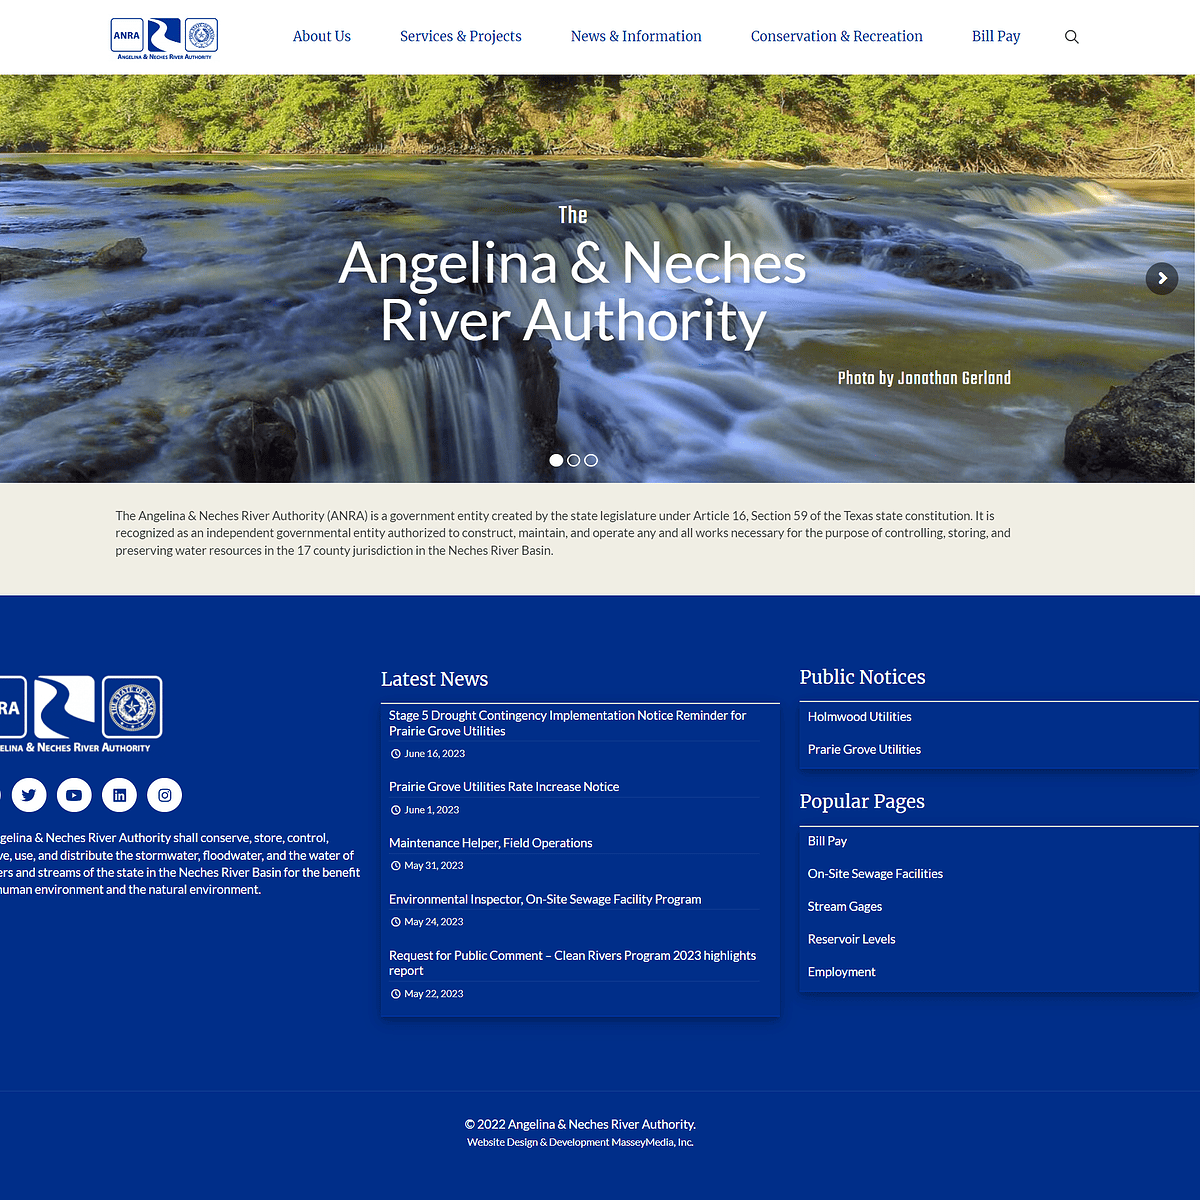 ANRA Website Design Screenshot - Homepage